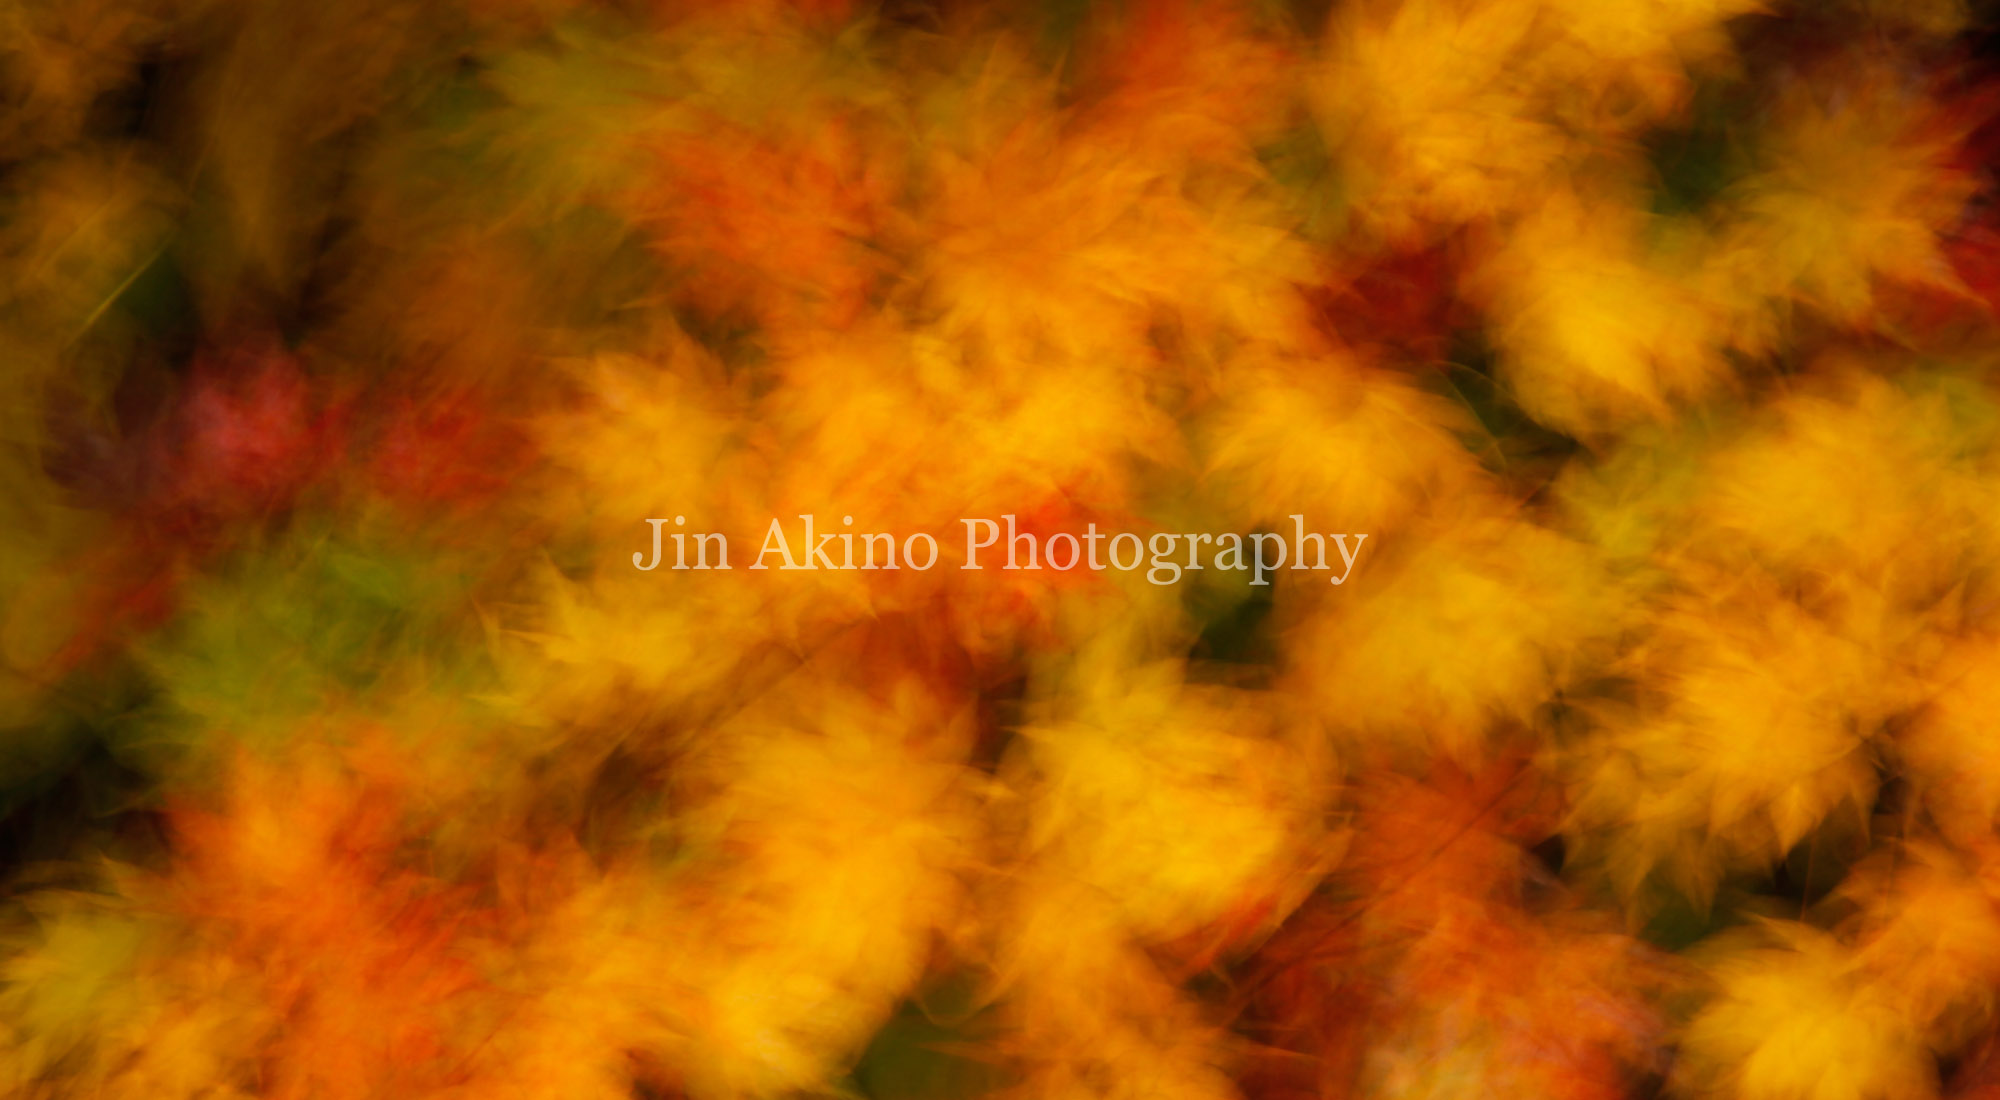 Jin Akino Photography